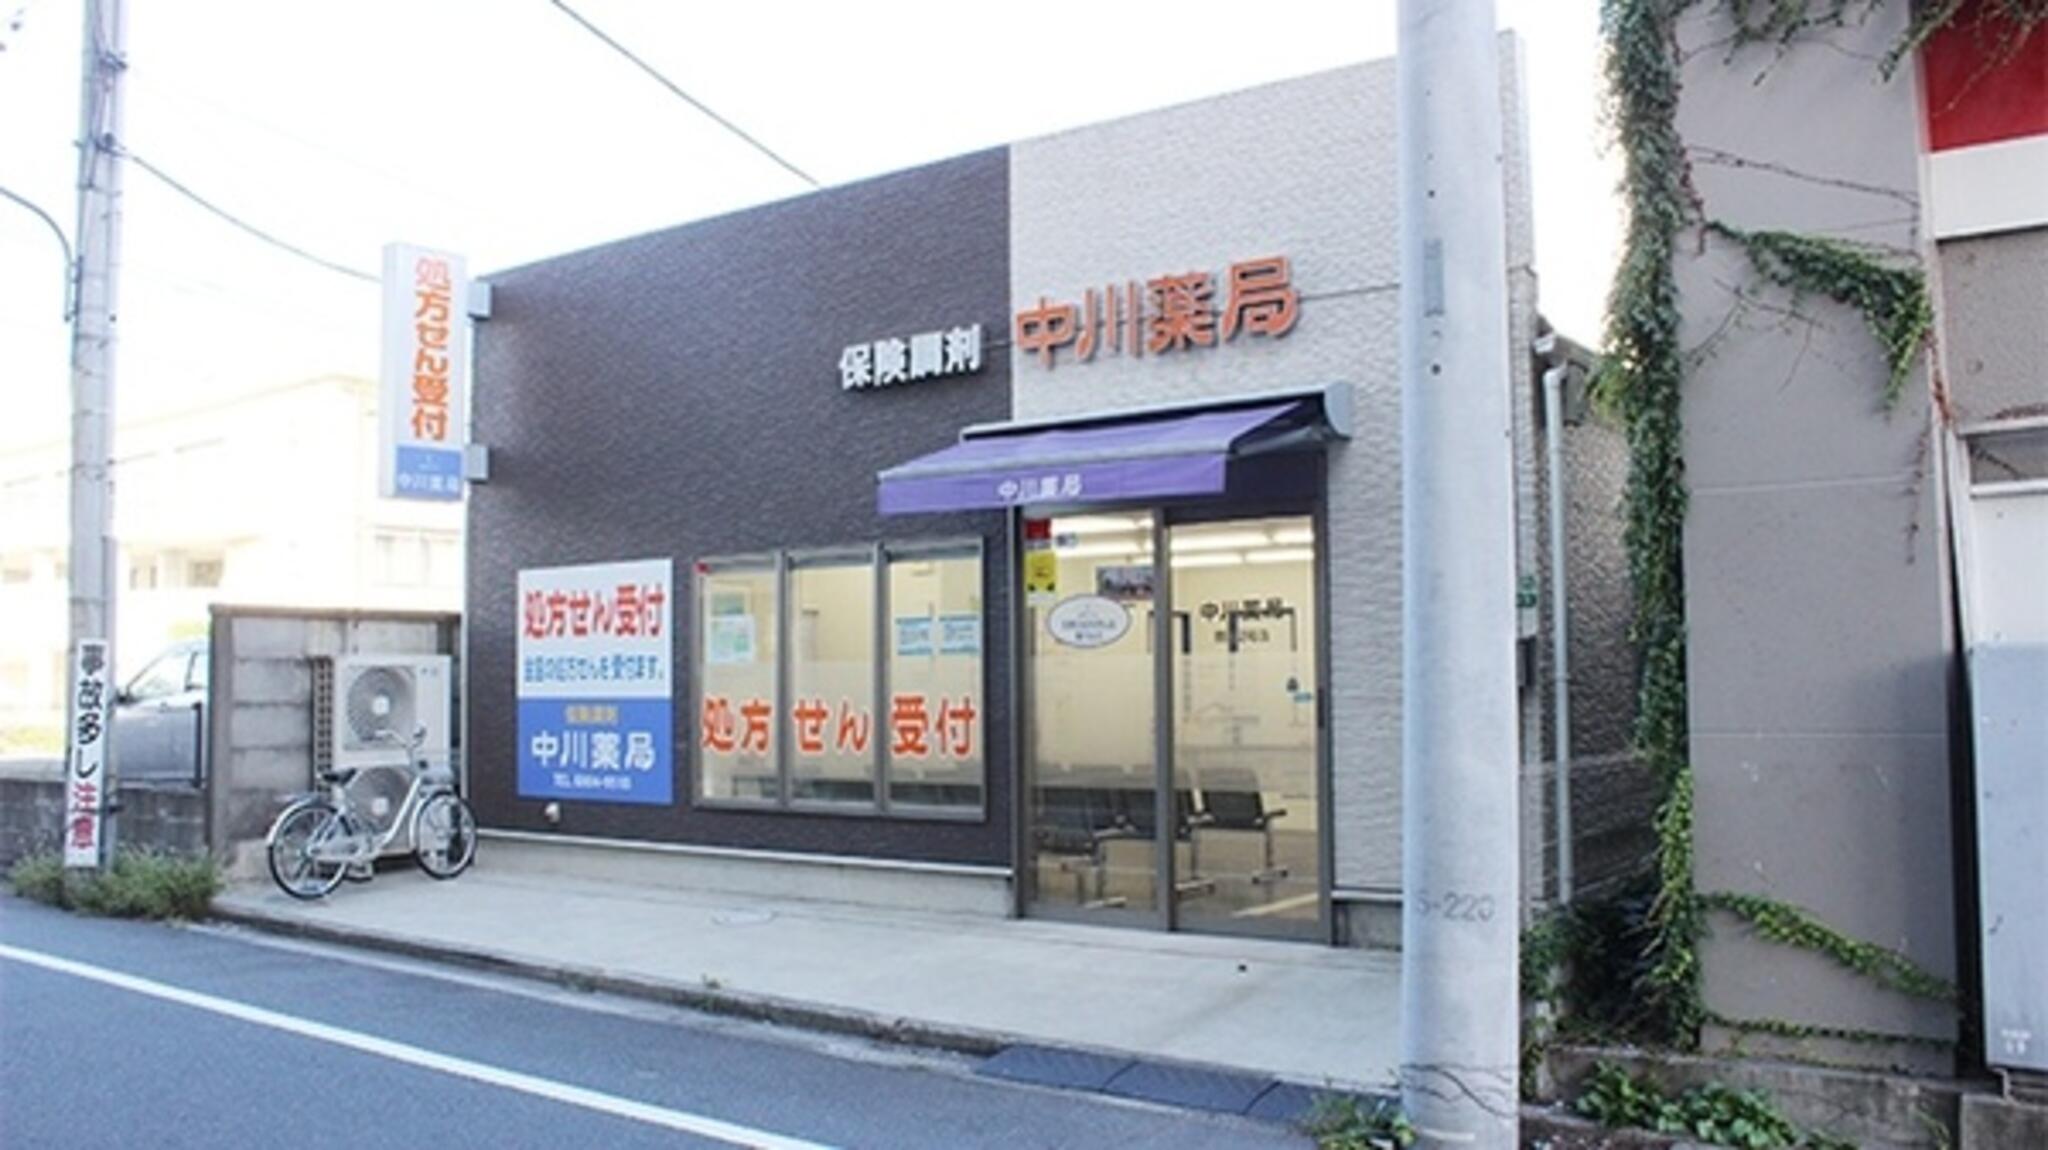 G&Gワークス 中川薬局 関町2号店の代表写真1